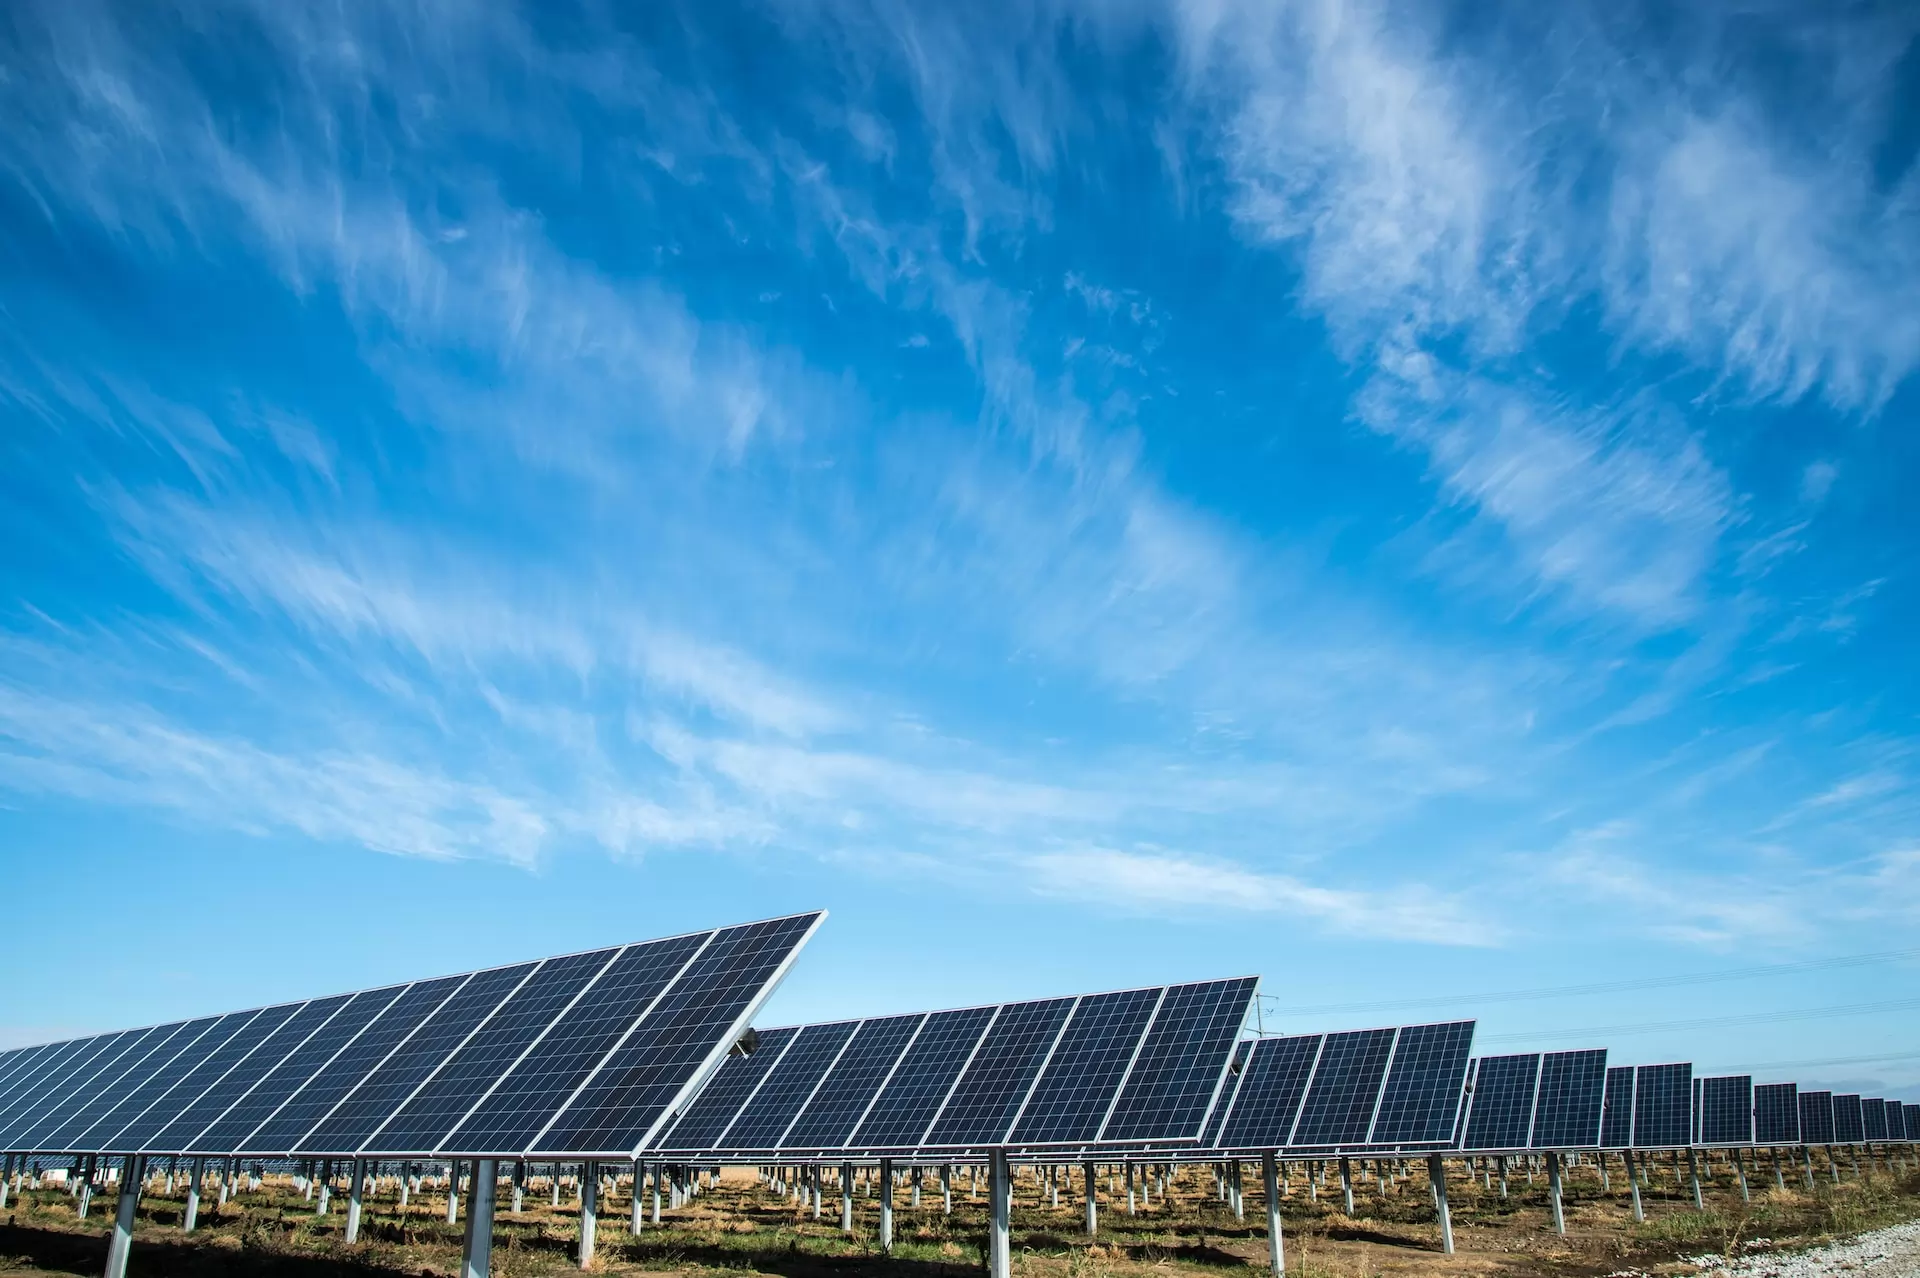 The market for solar panels